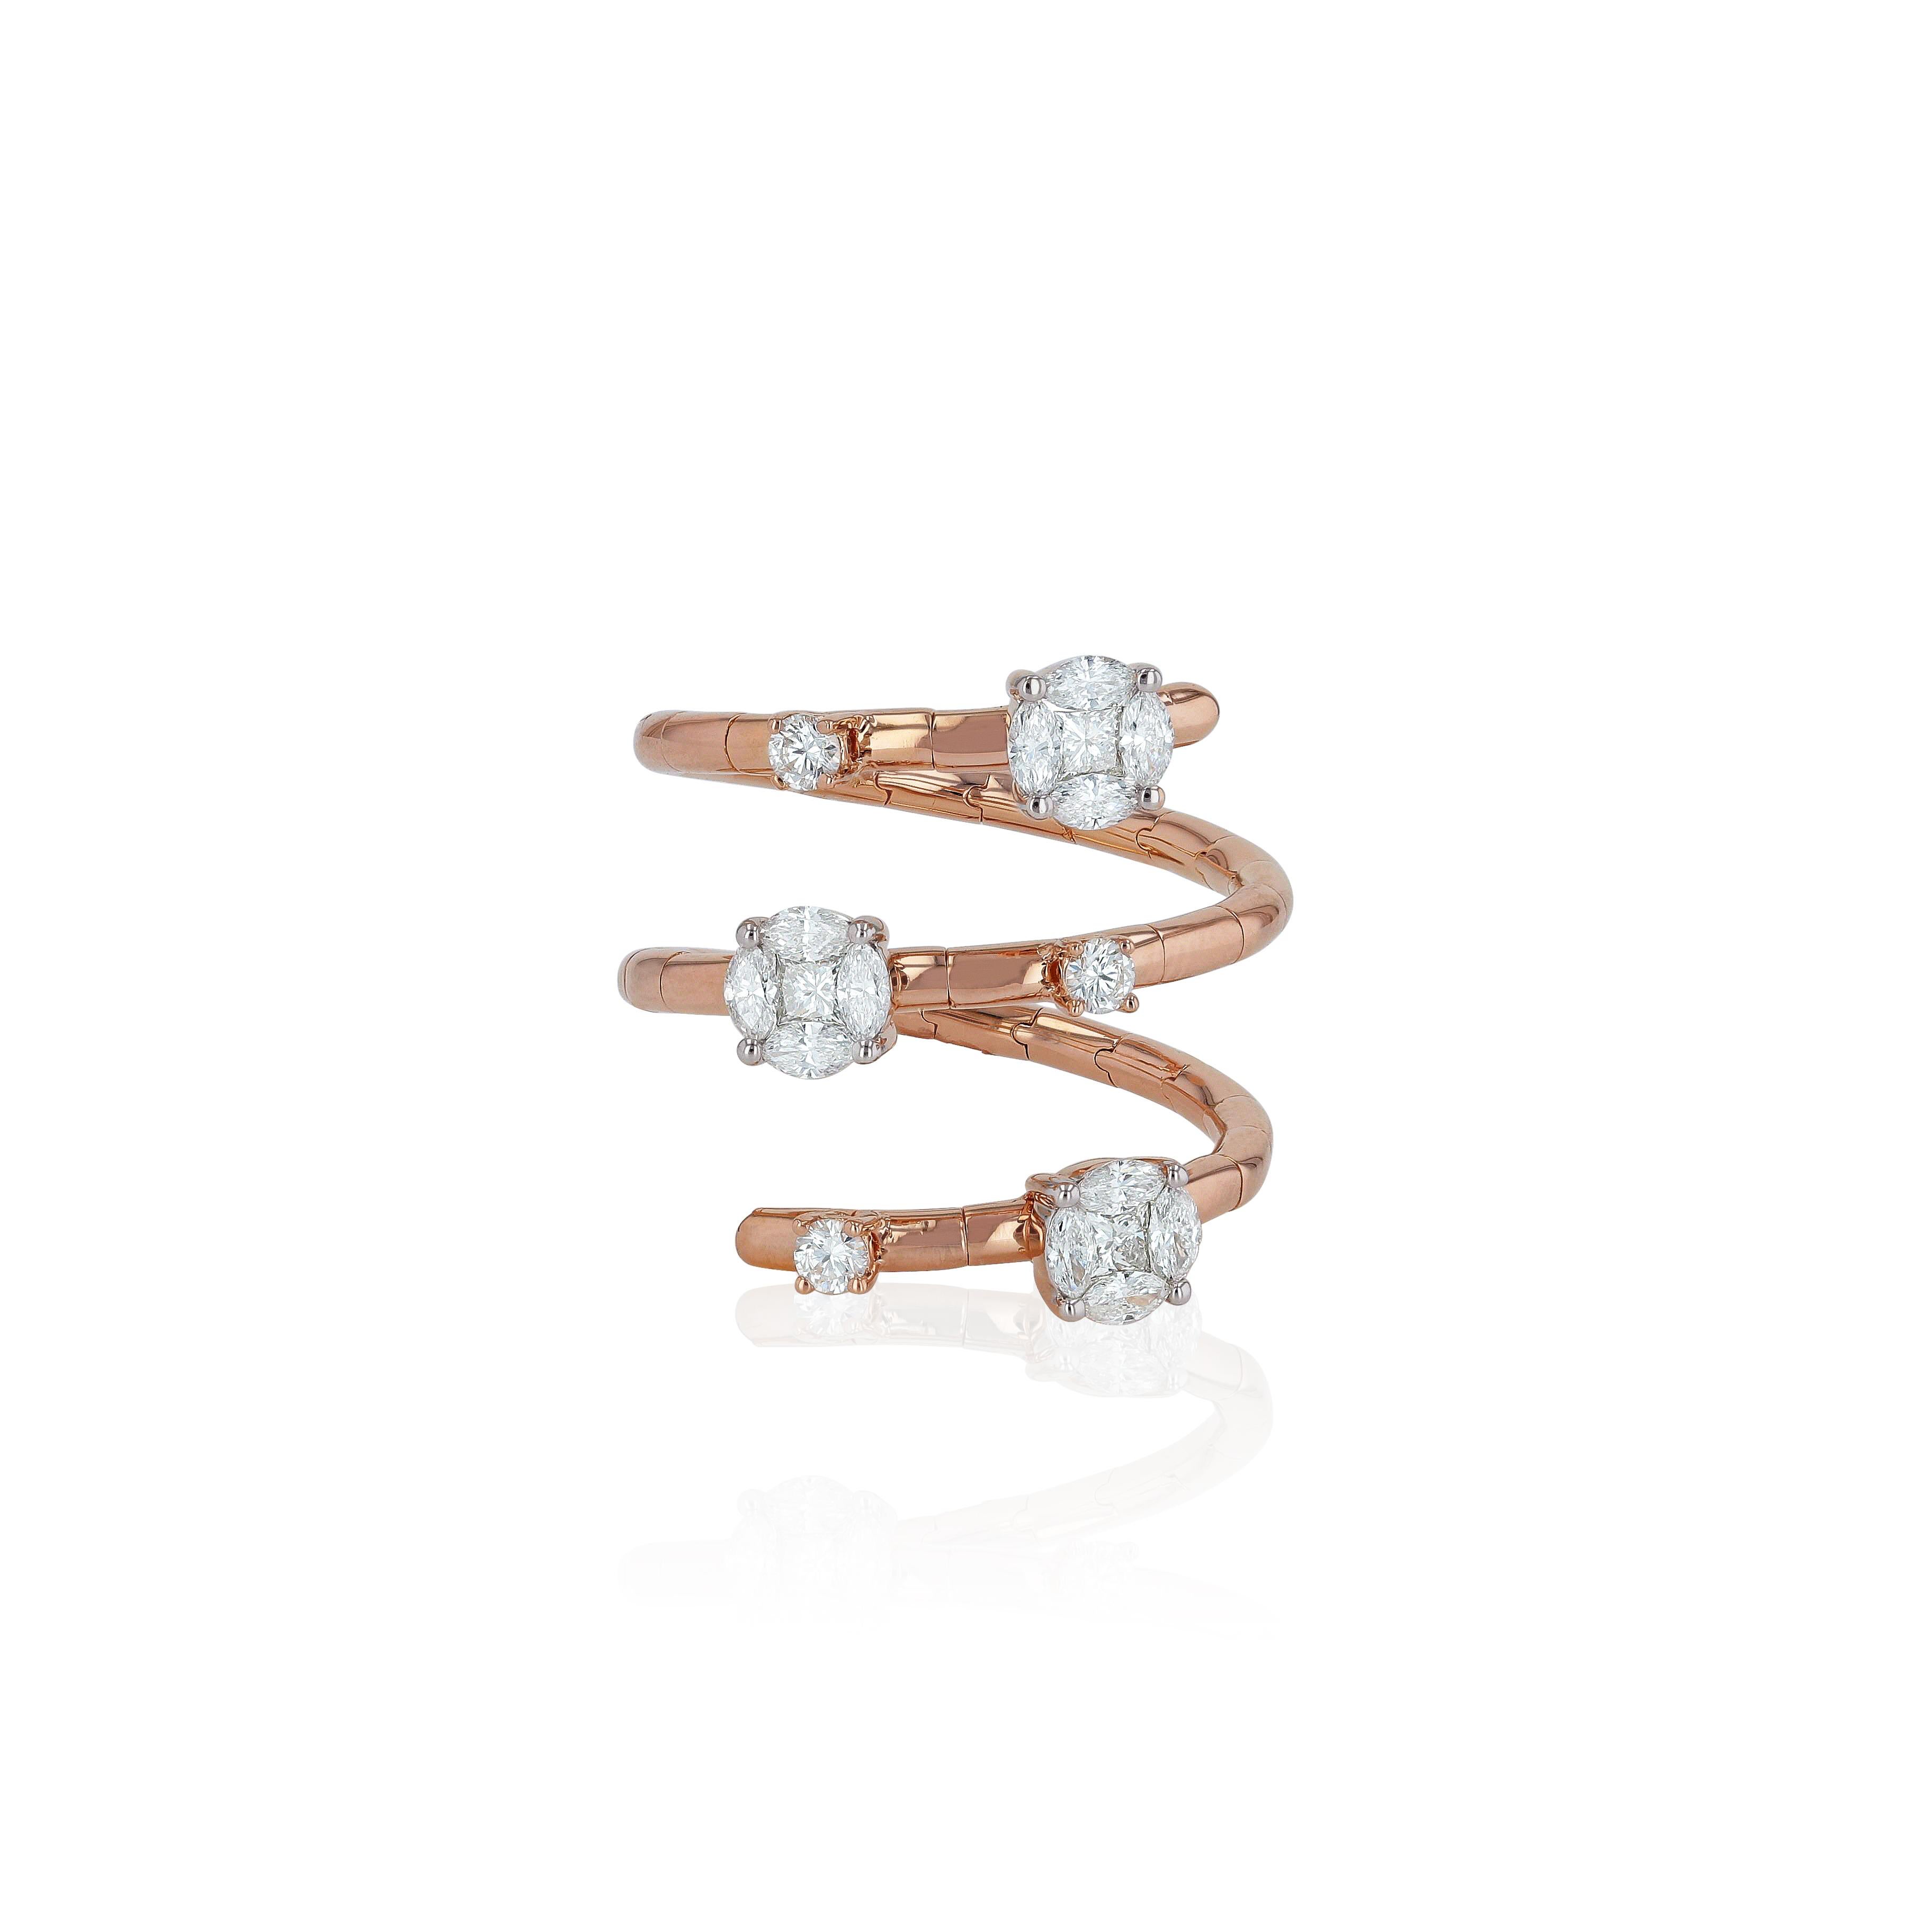 Romantic Amwaj Jewelry Round Cut Diamond Ring in 18 Karat Rose Gold For Sale